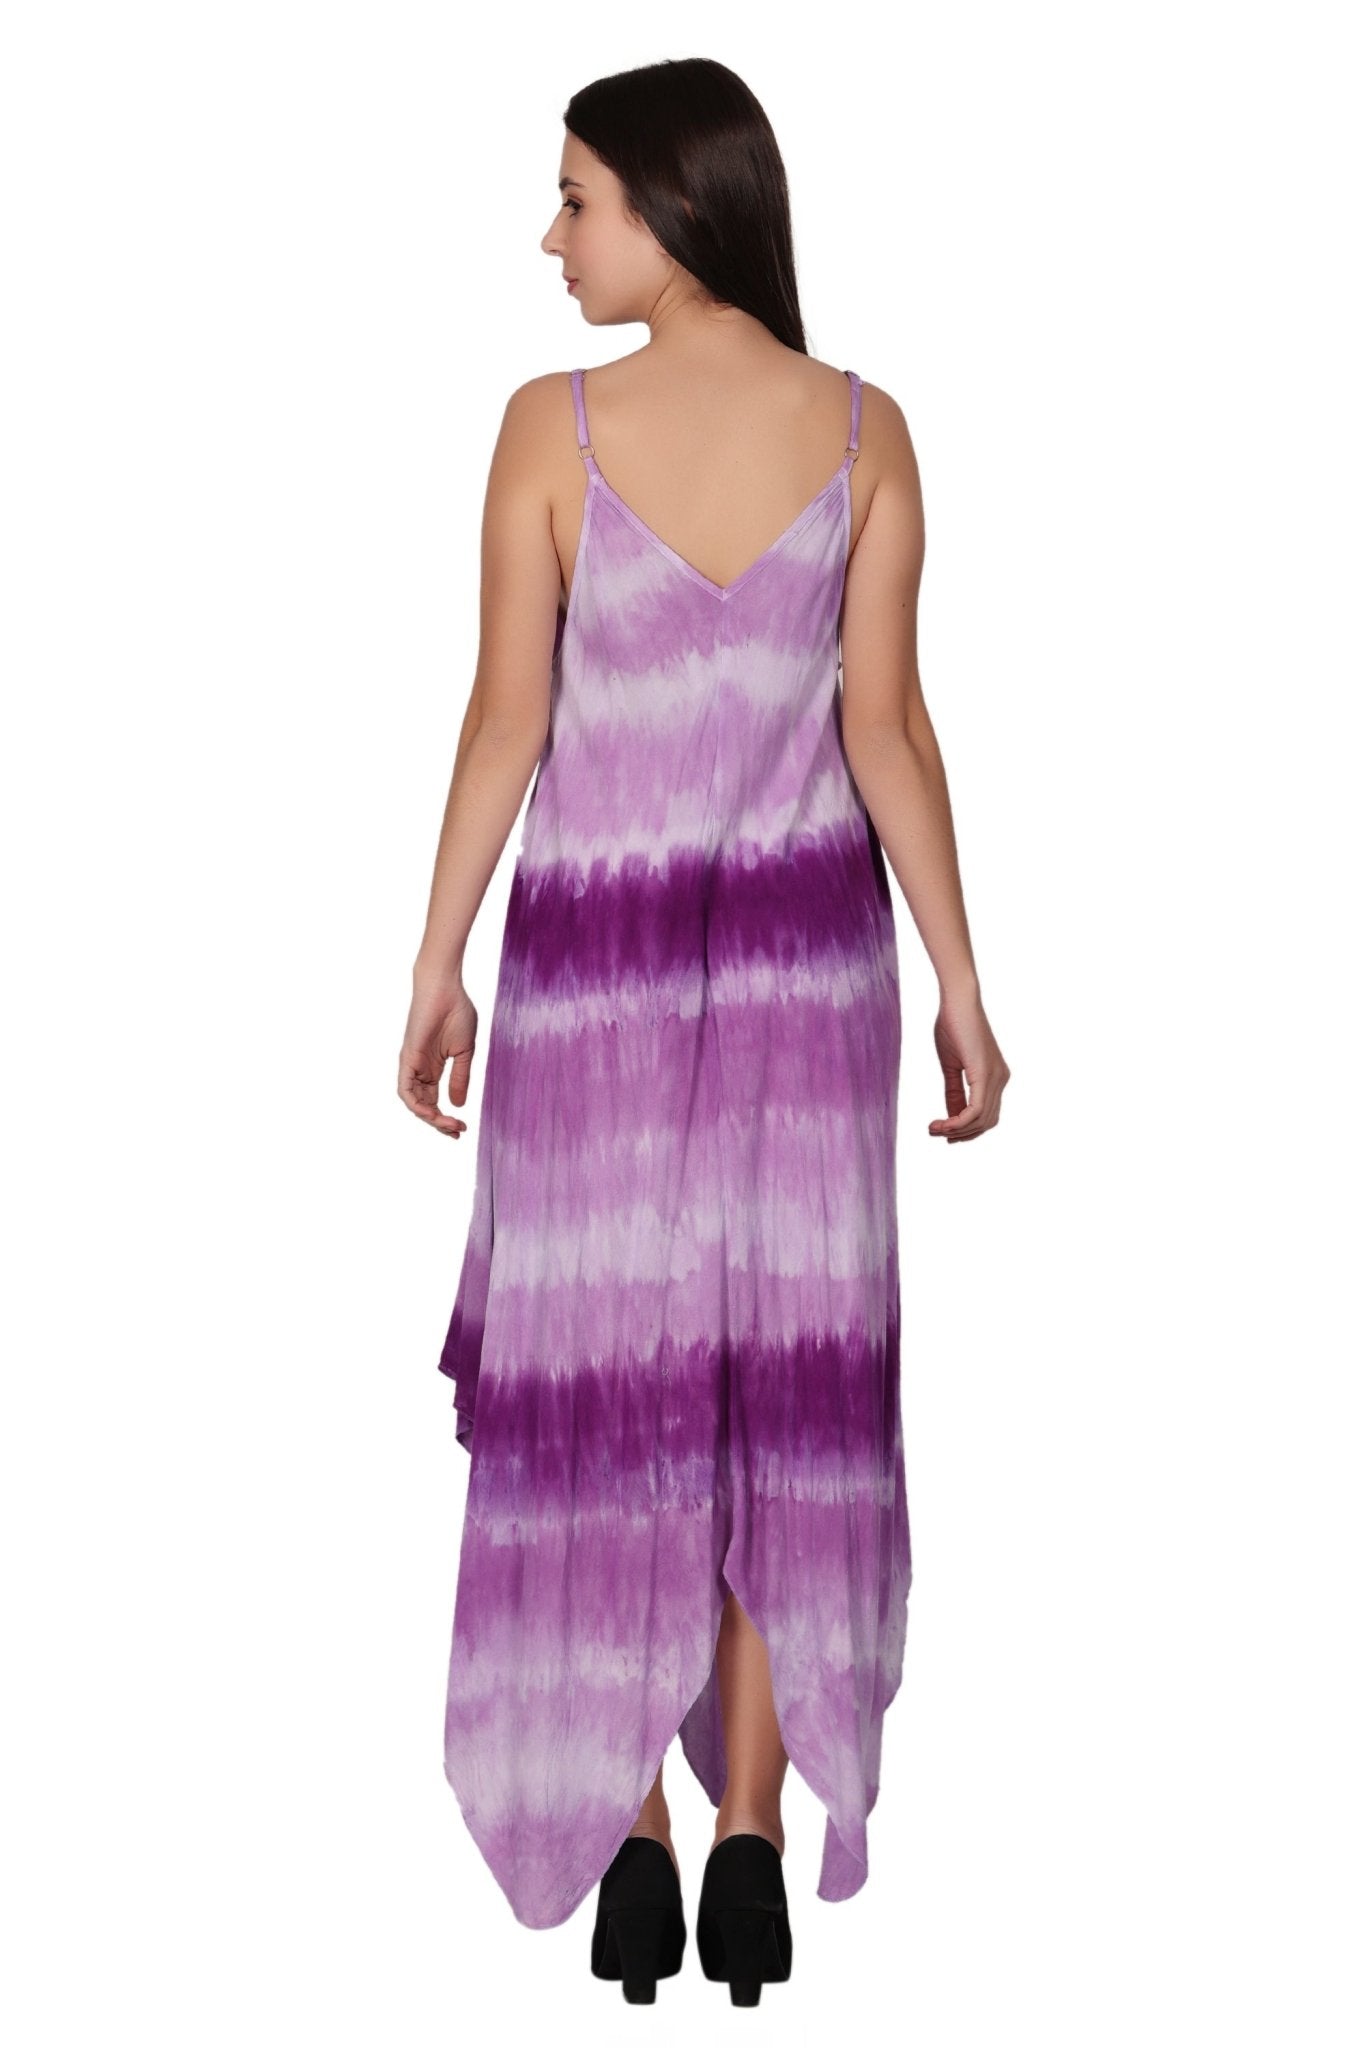 Tie Dye Faux Jumper Dress JD20108 - Advance Apparels Inc